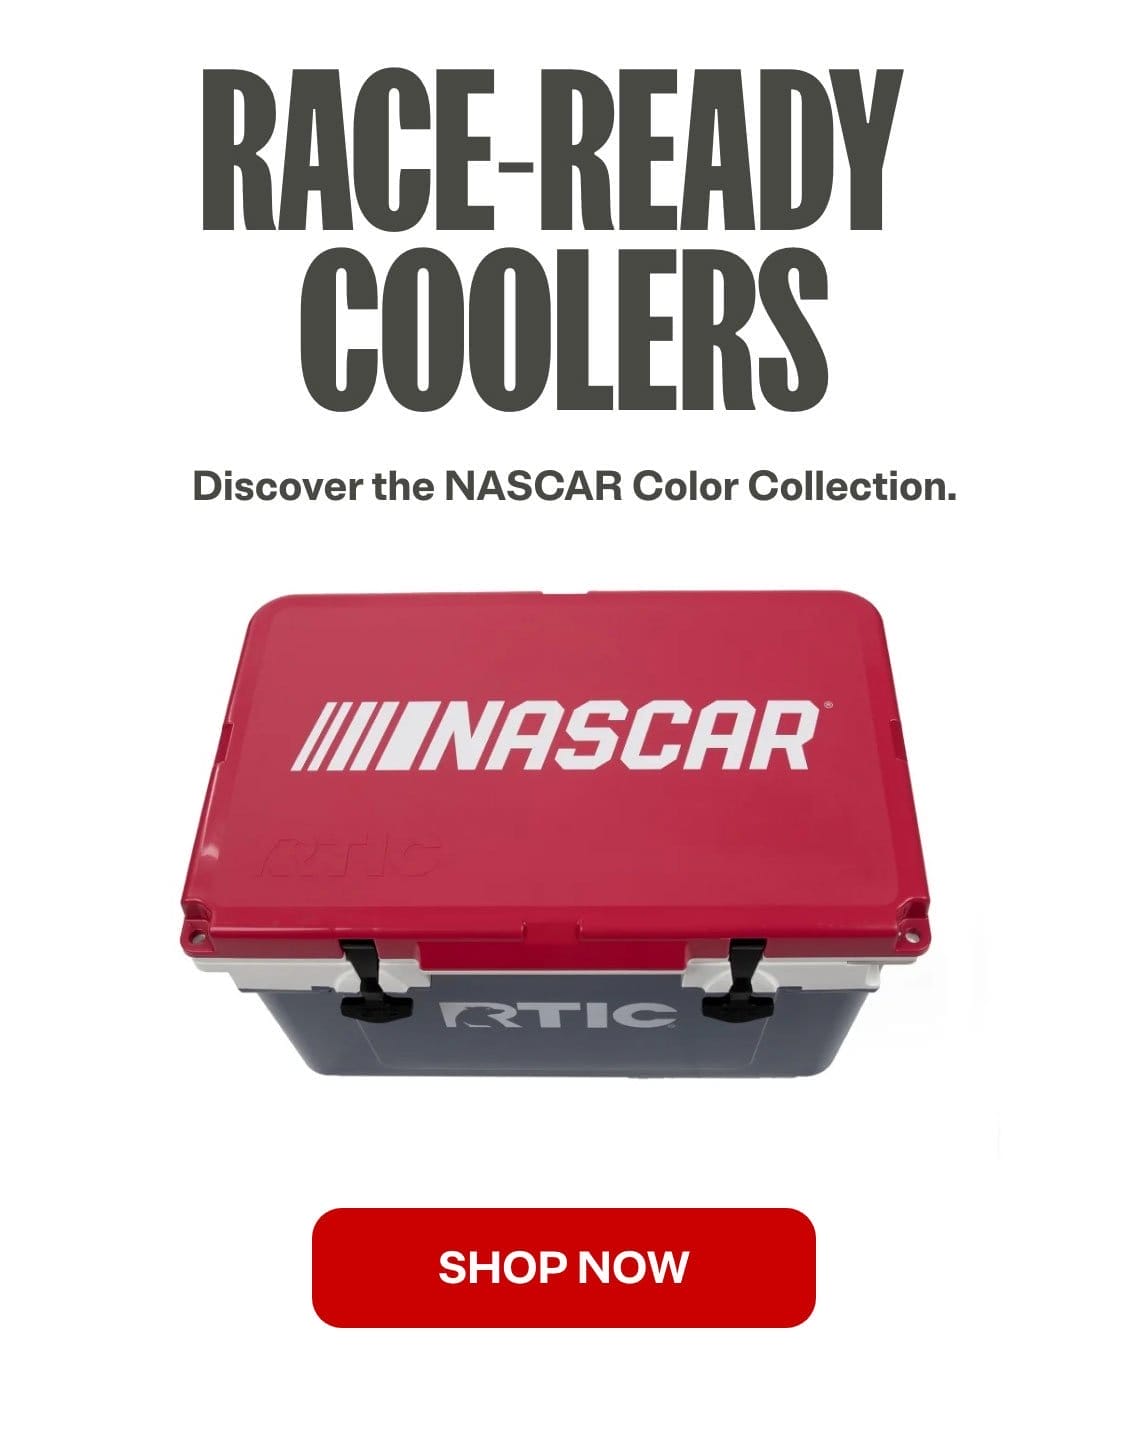 Discover the NASCAR Color collection.